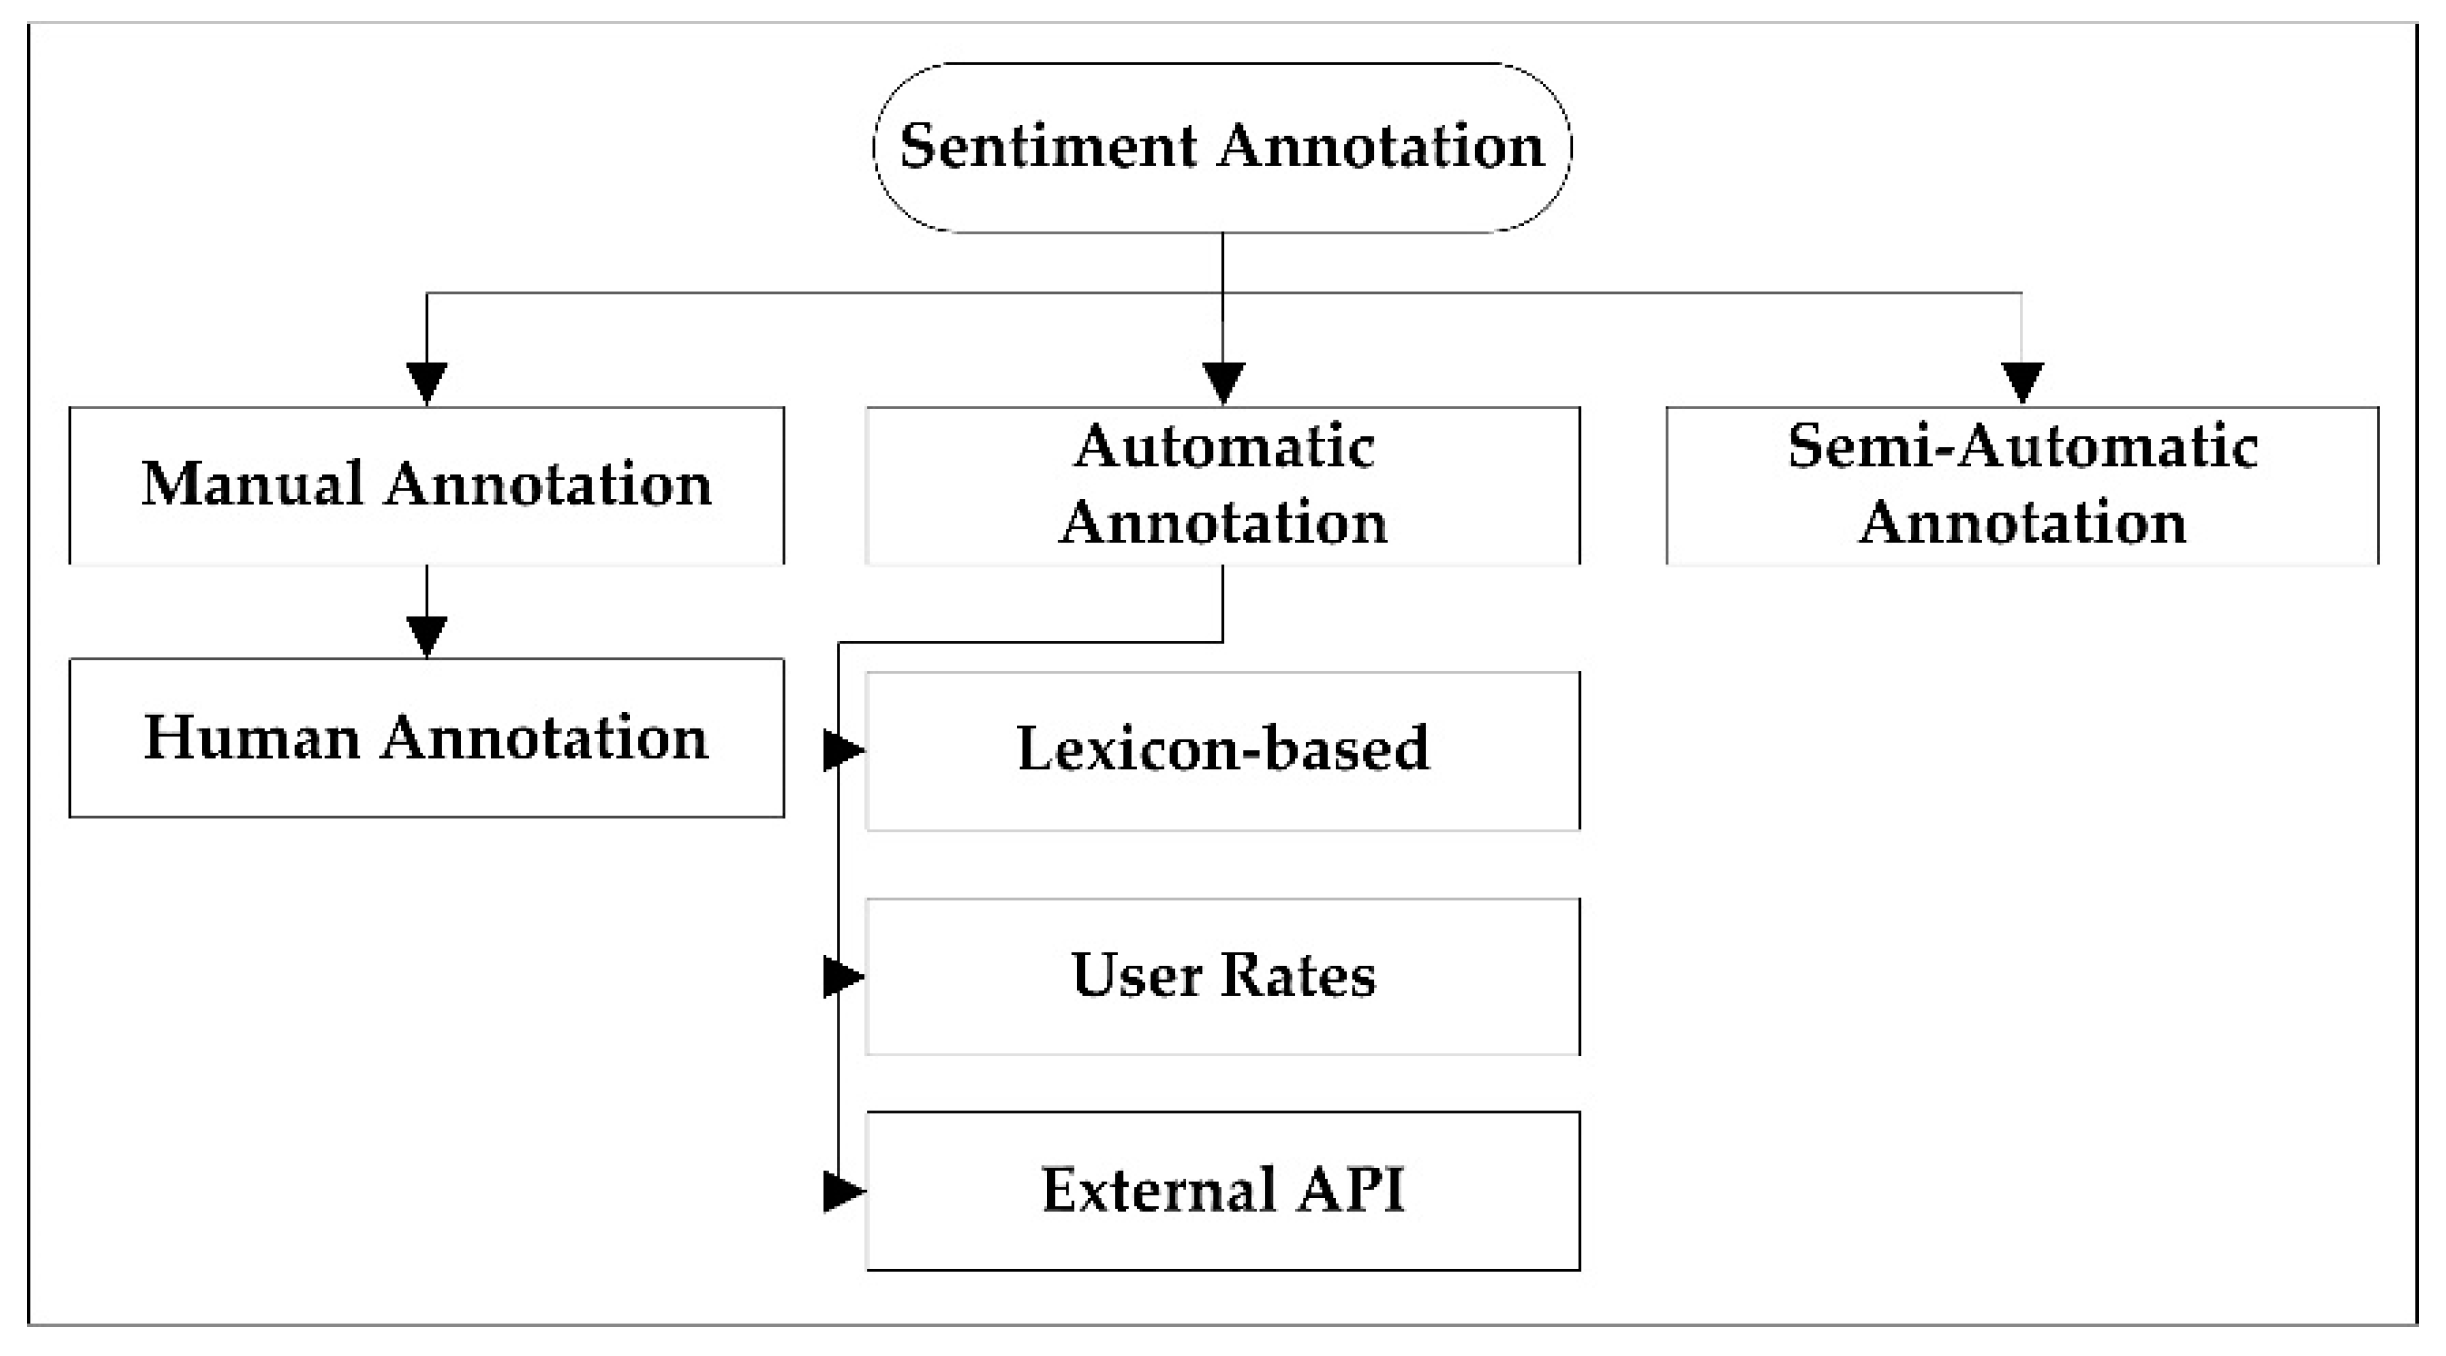 twitter-sentiment-analysis-tutorial-201107/data/opinion-lexicon